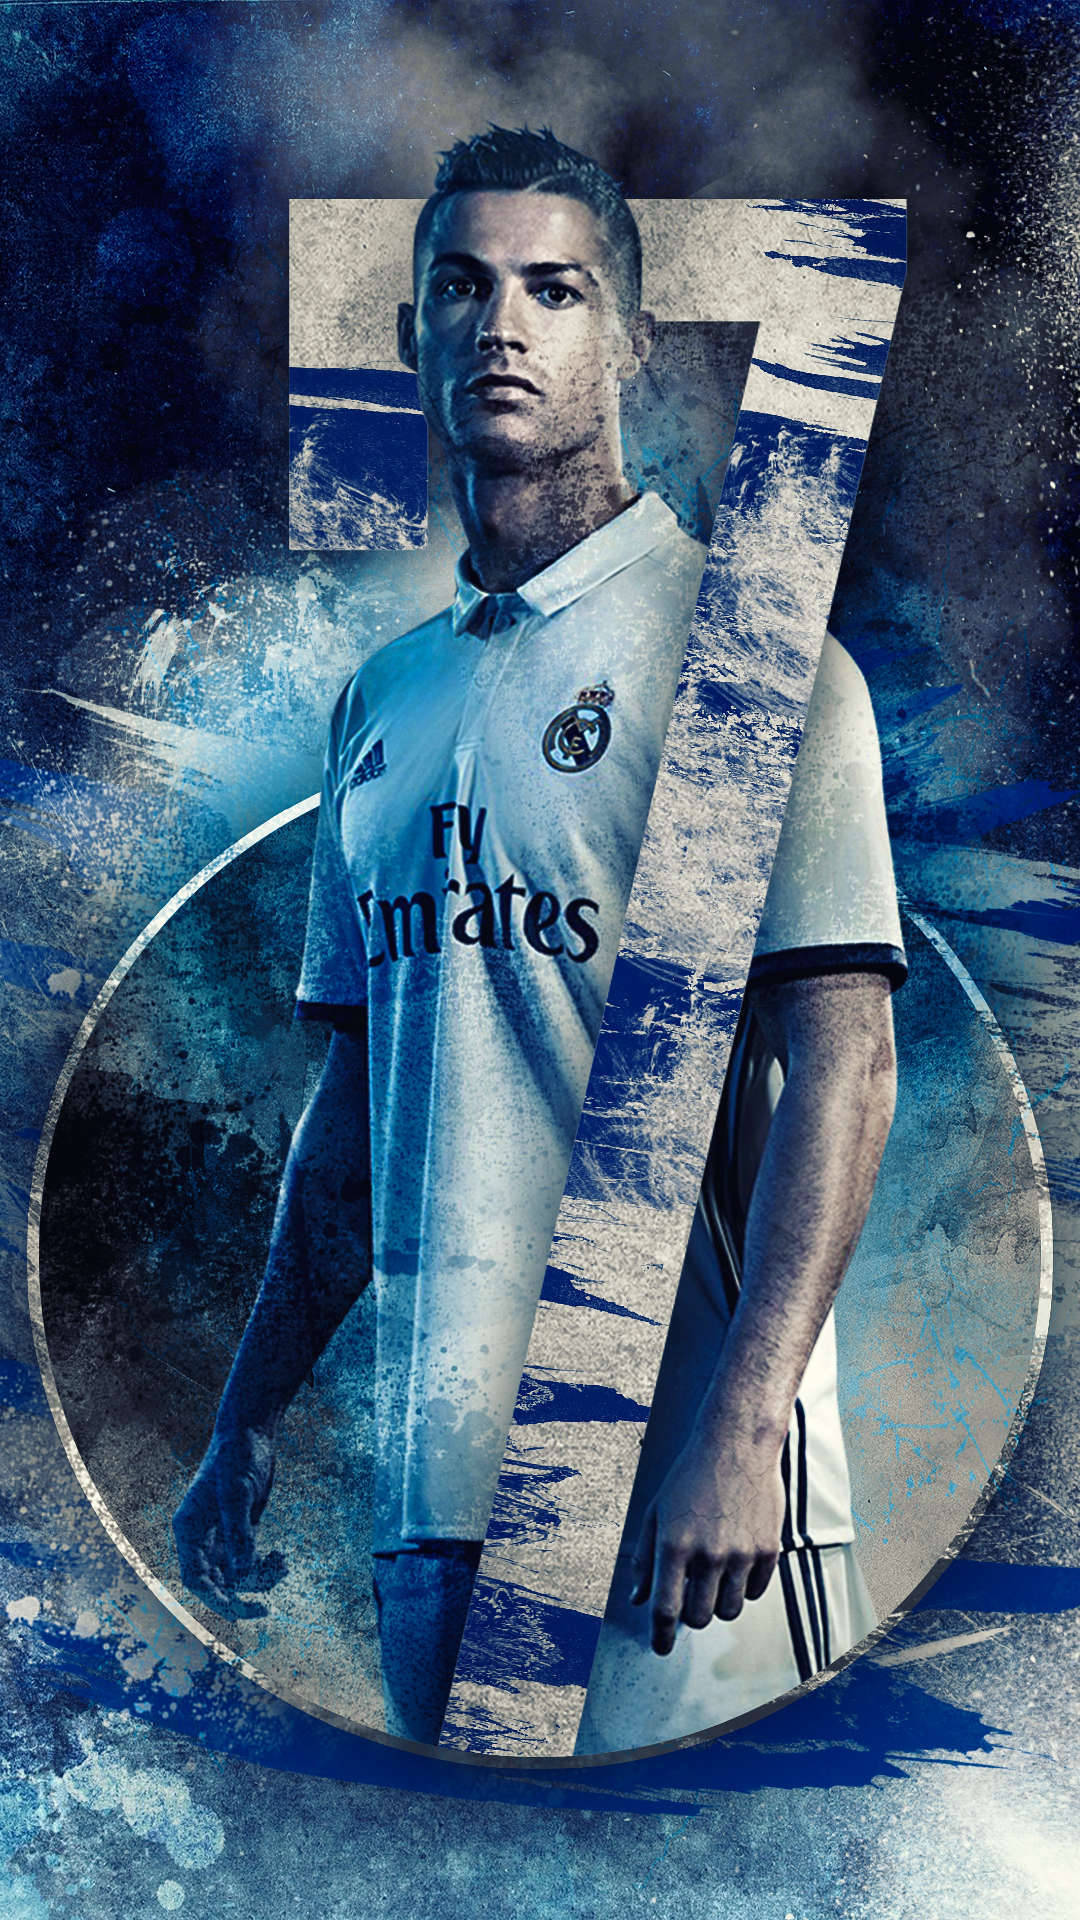 100+] Cristiano Ronaldo Cool Wallpapers